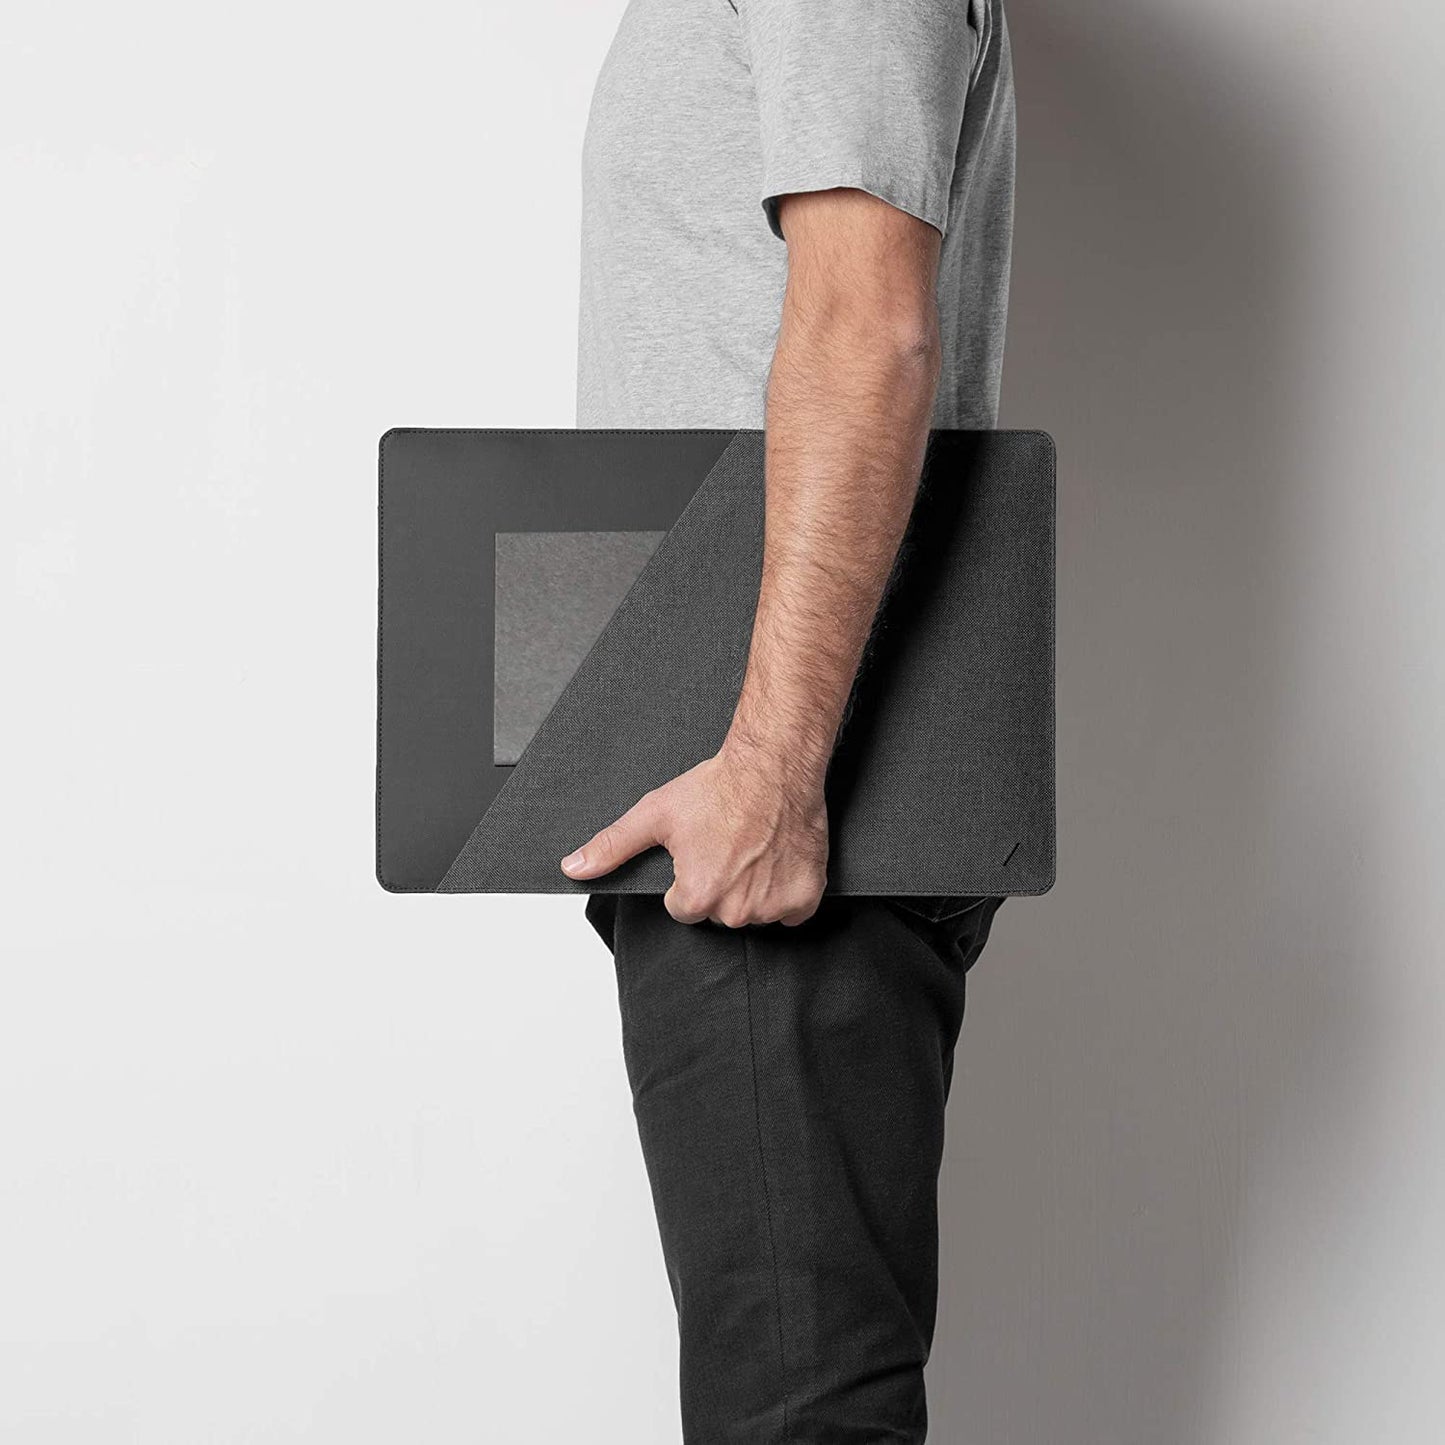 Native Union Stow Slim Sleeve for MacBook 15"/16" - Slate